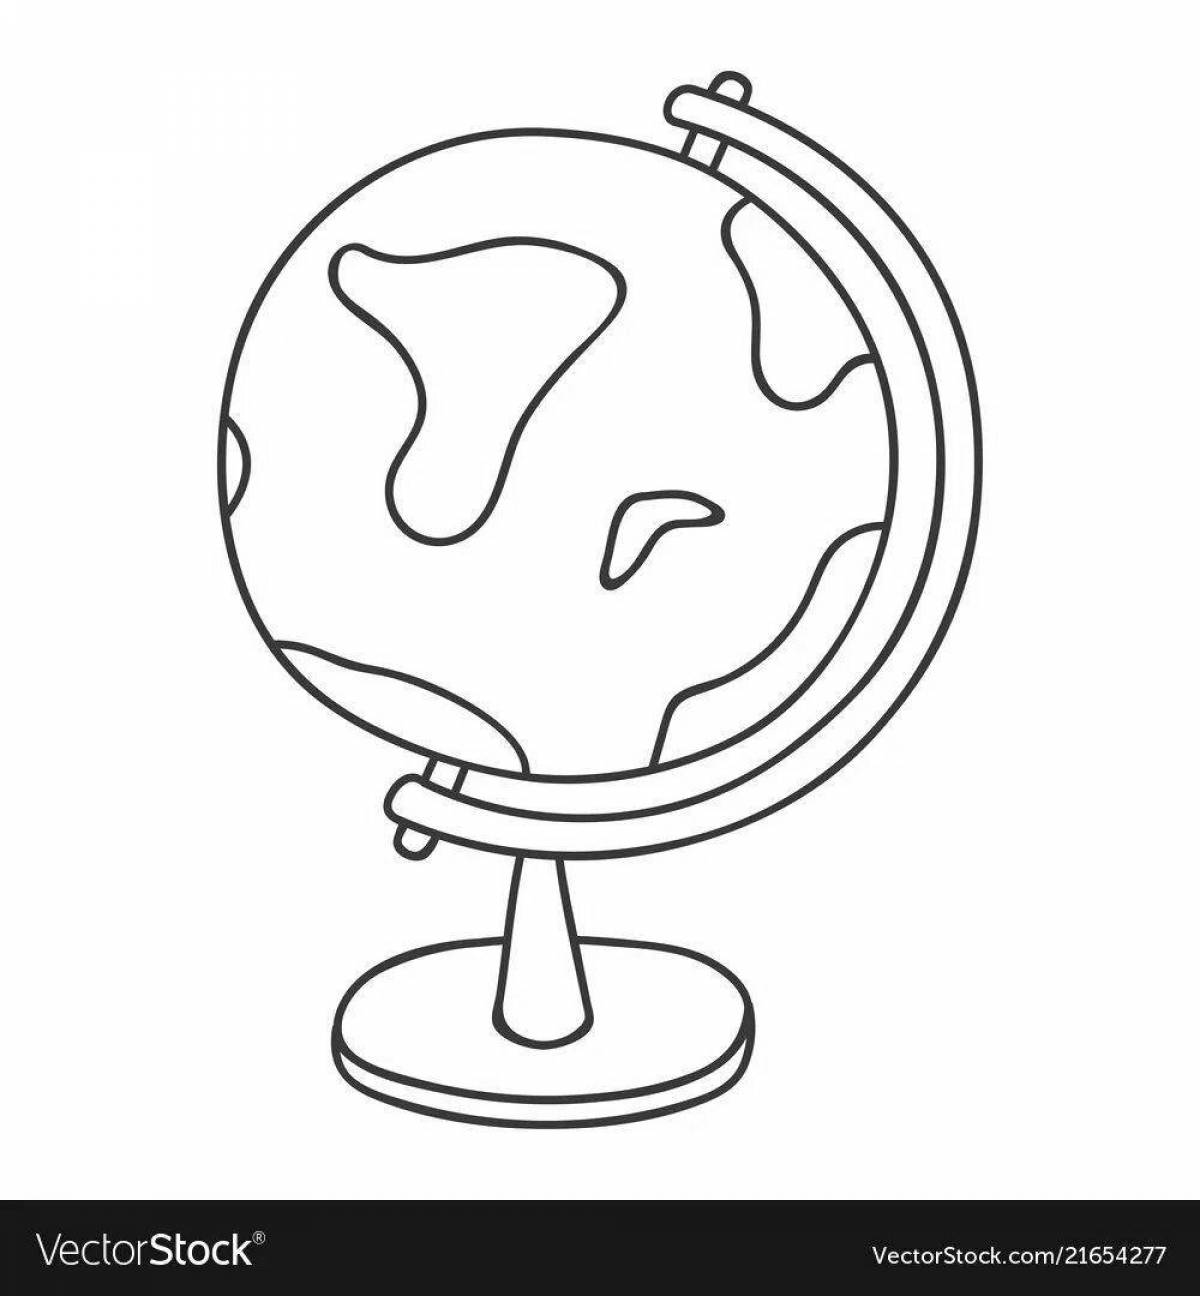 Children's globe drawing for #4